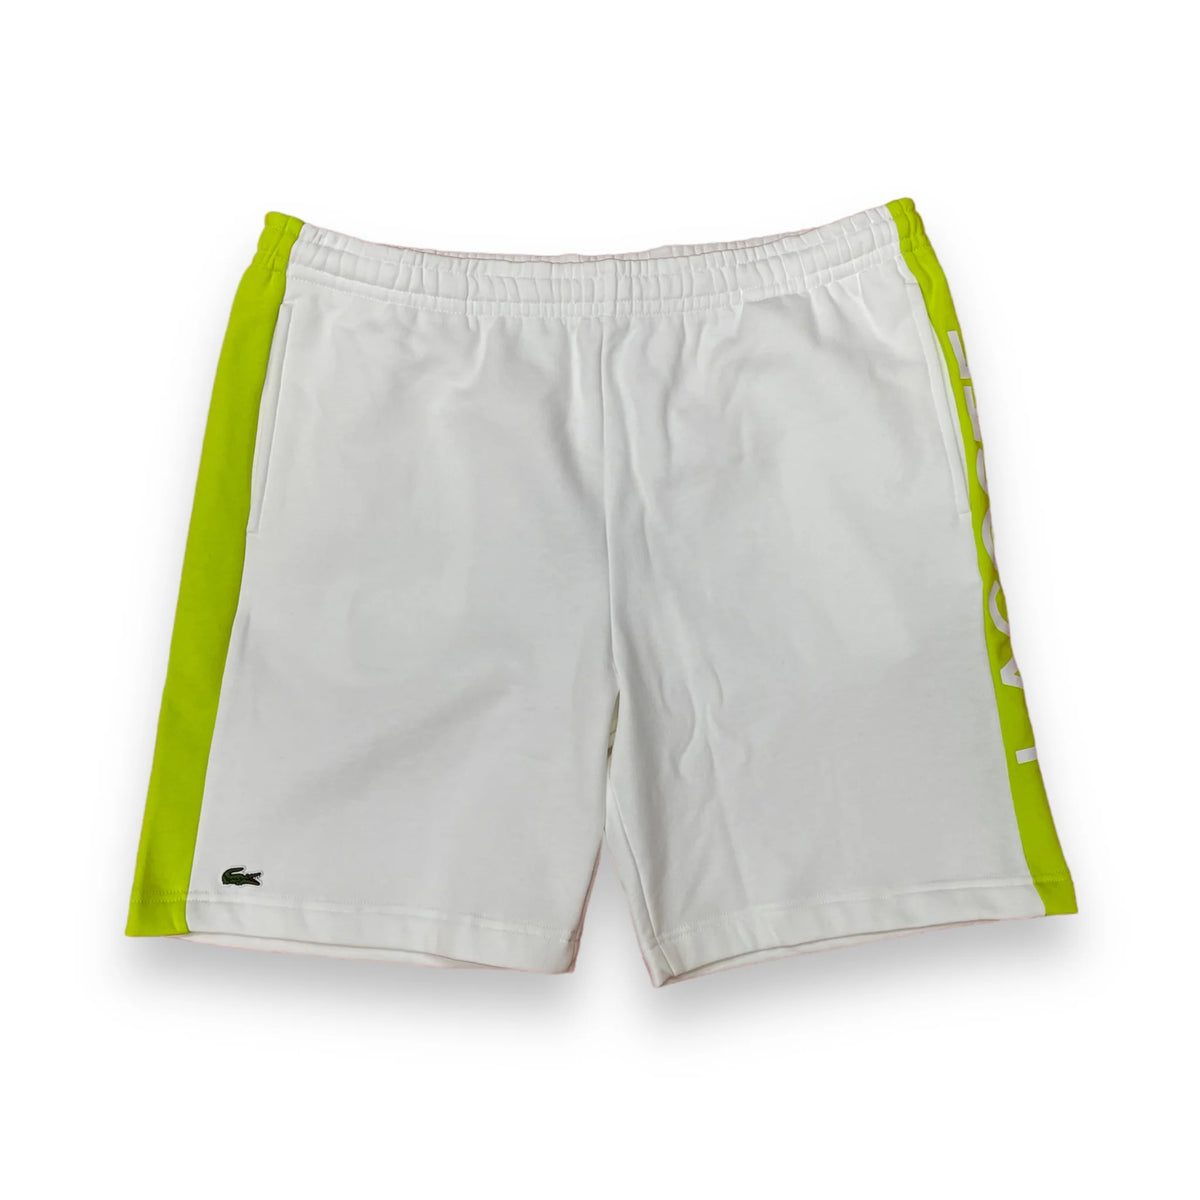 Lacoste - Cotton Fleece Colorblock Shorts - White/Yellow